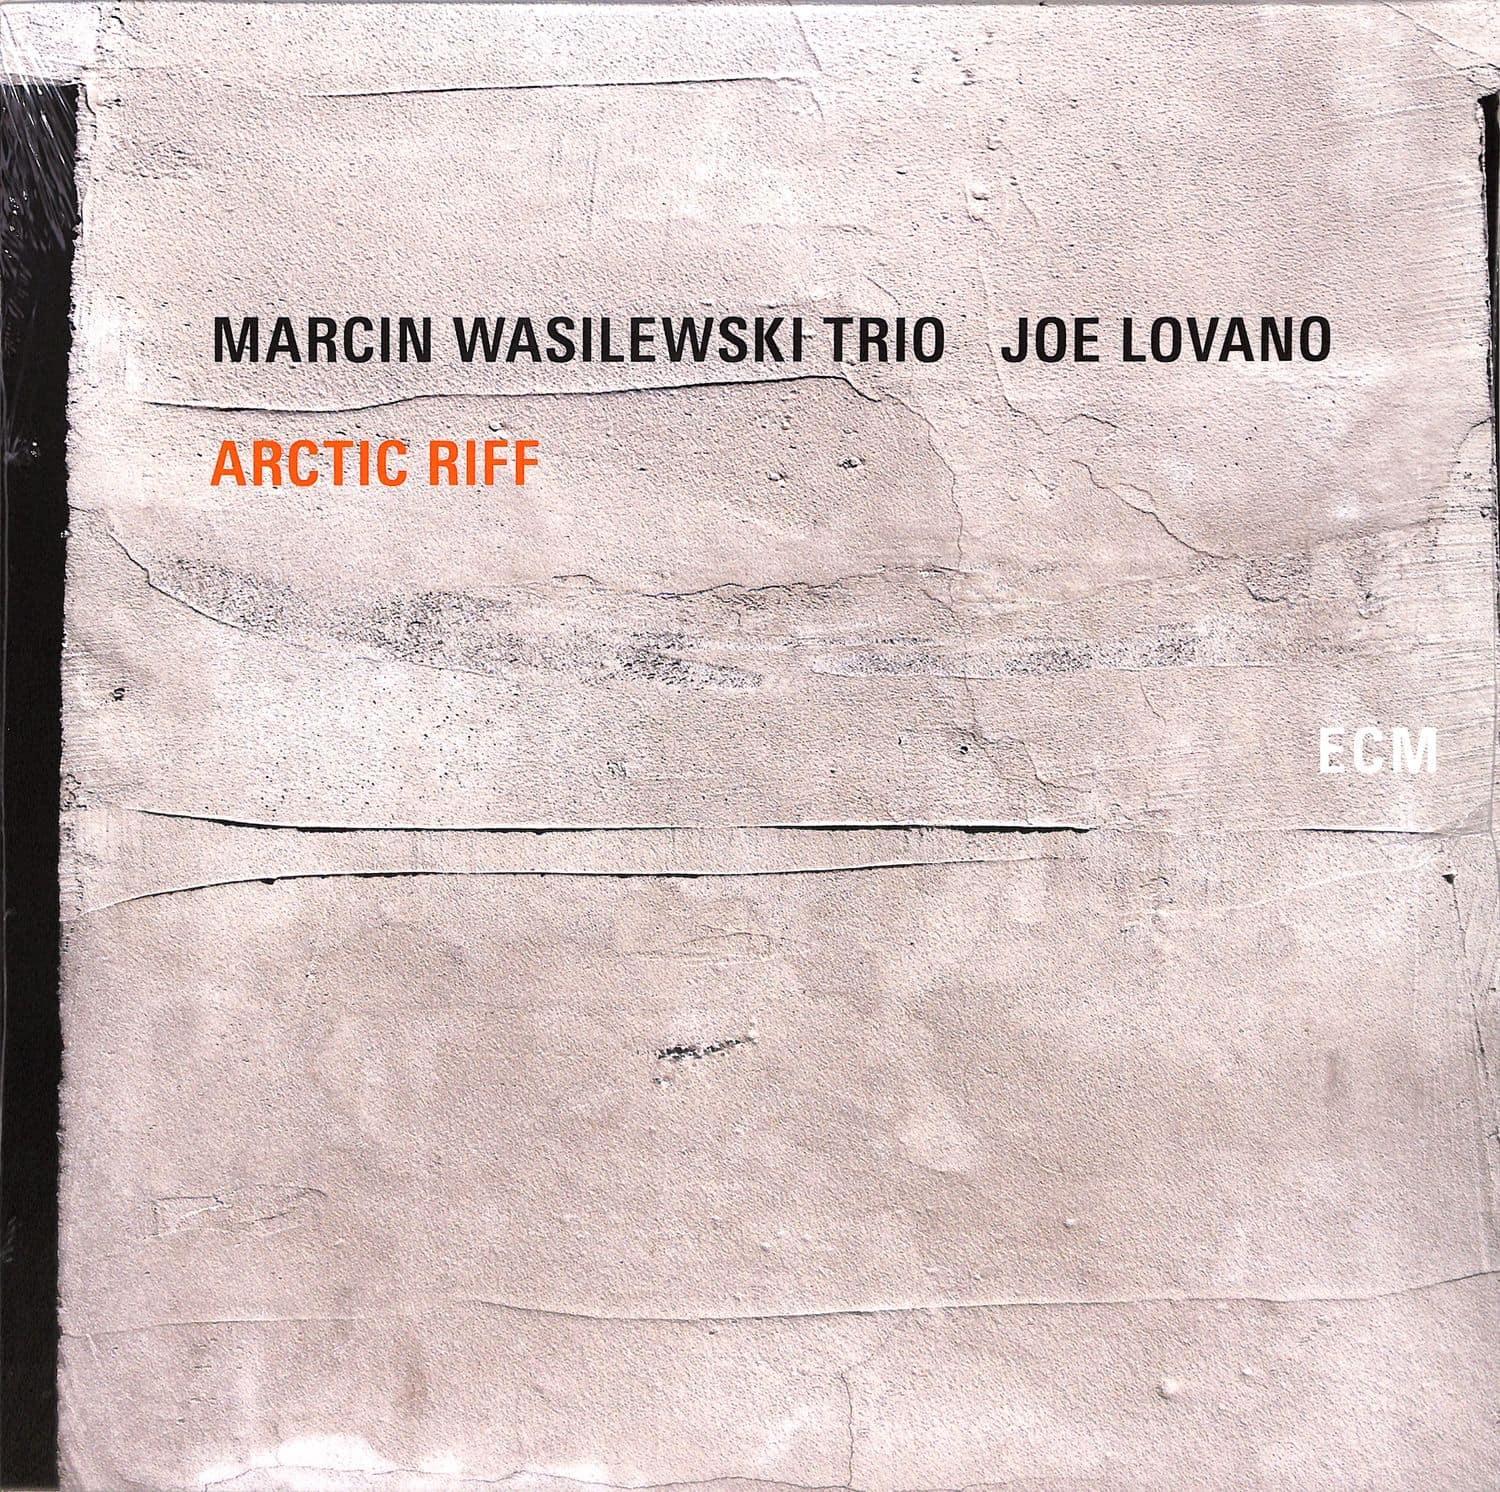 Marcin Wasilewski Trio & Joe Lovano - ARCTIC RIFF 